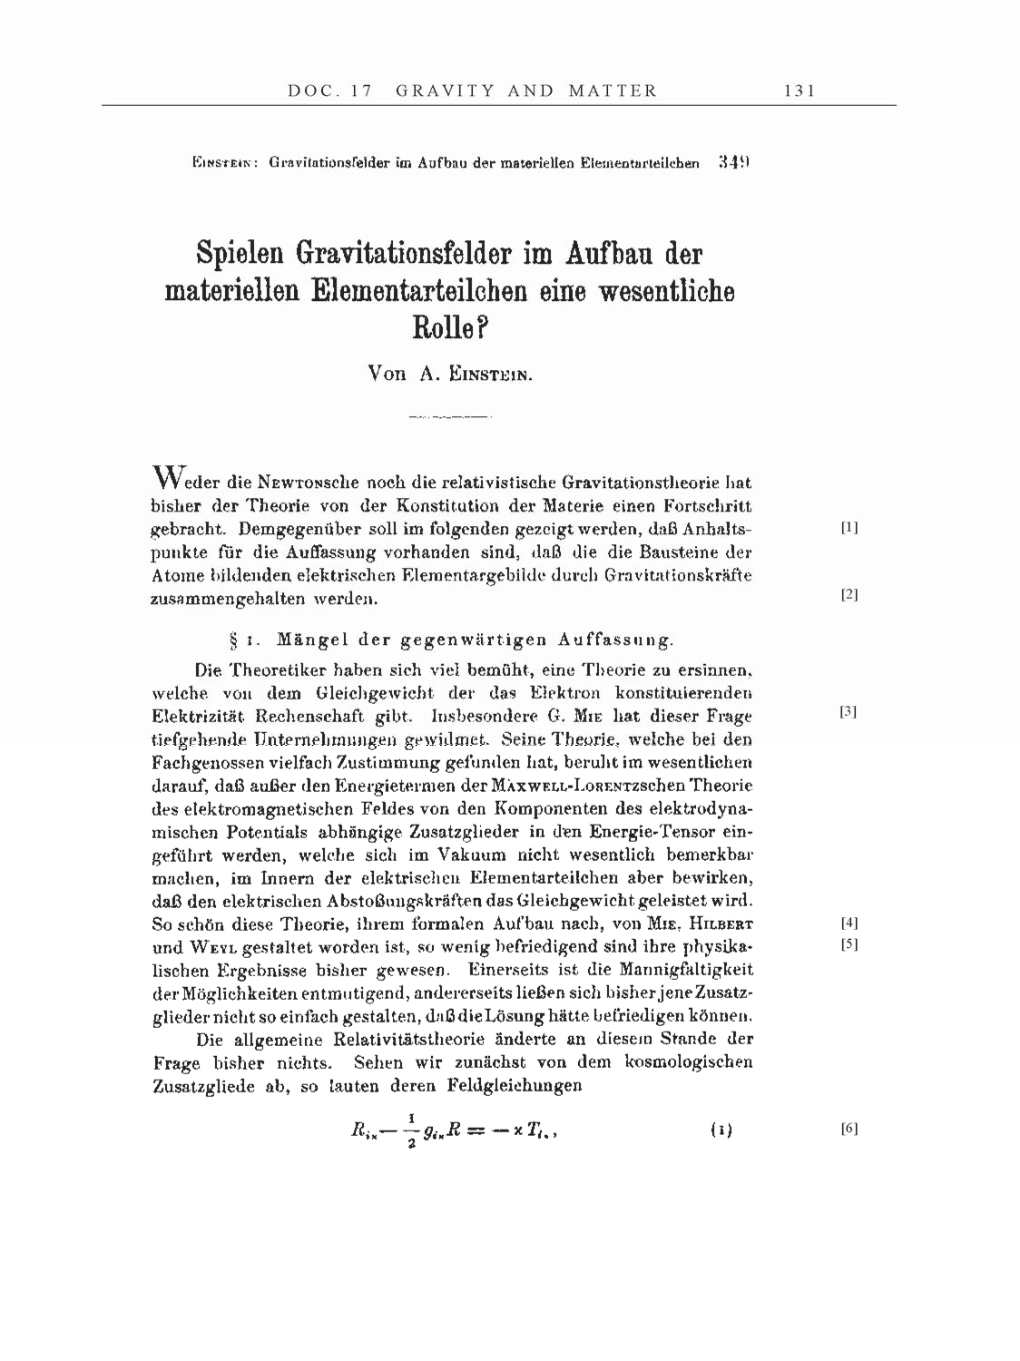 Volume 7: The Berlin Years: Writings, 1918-1921 page 131